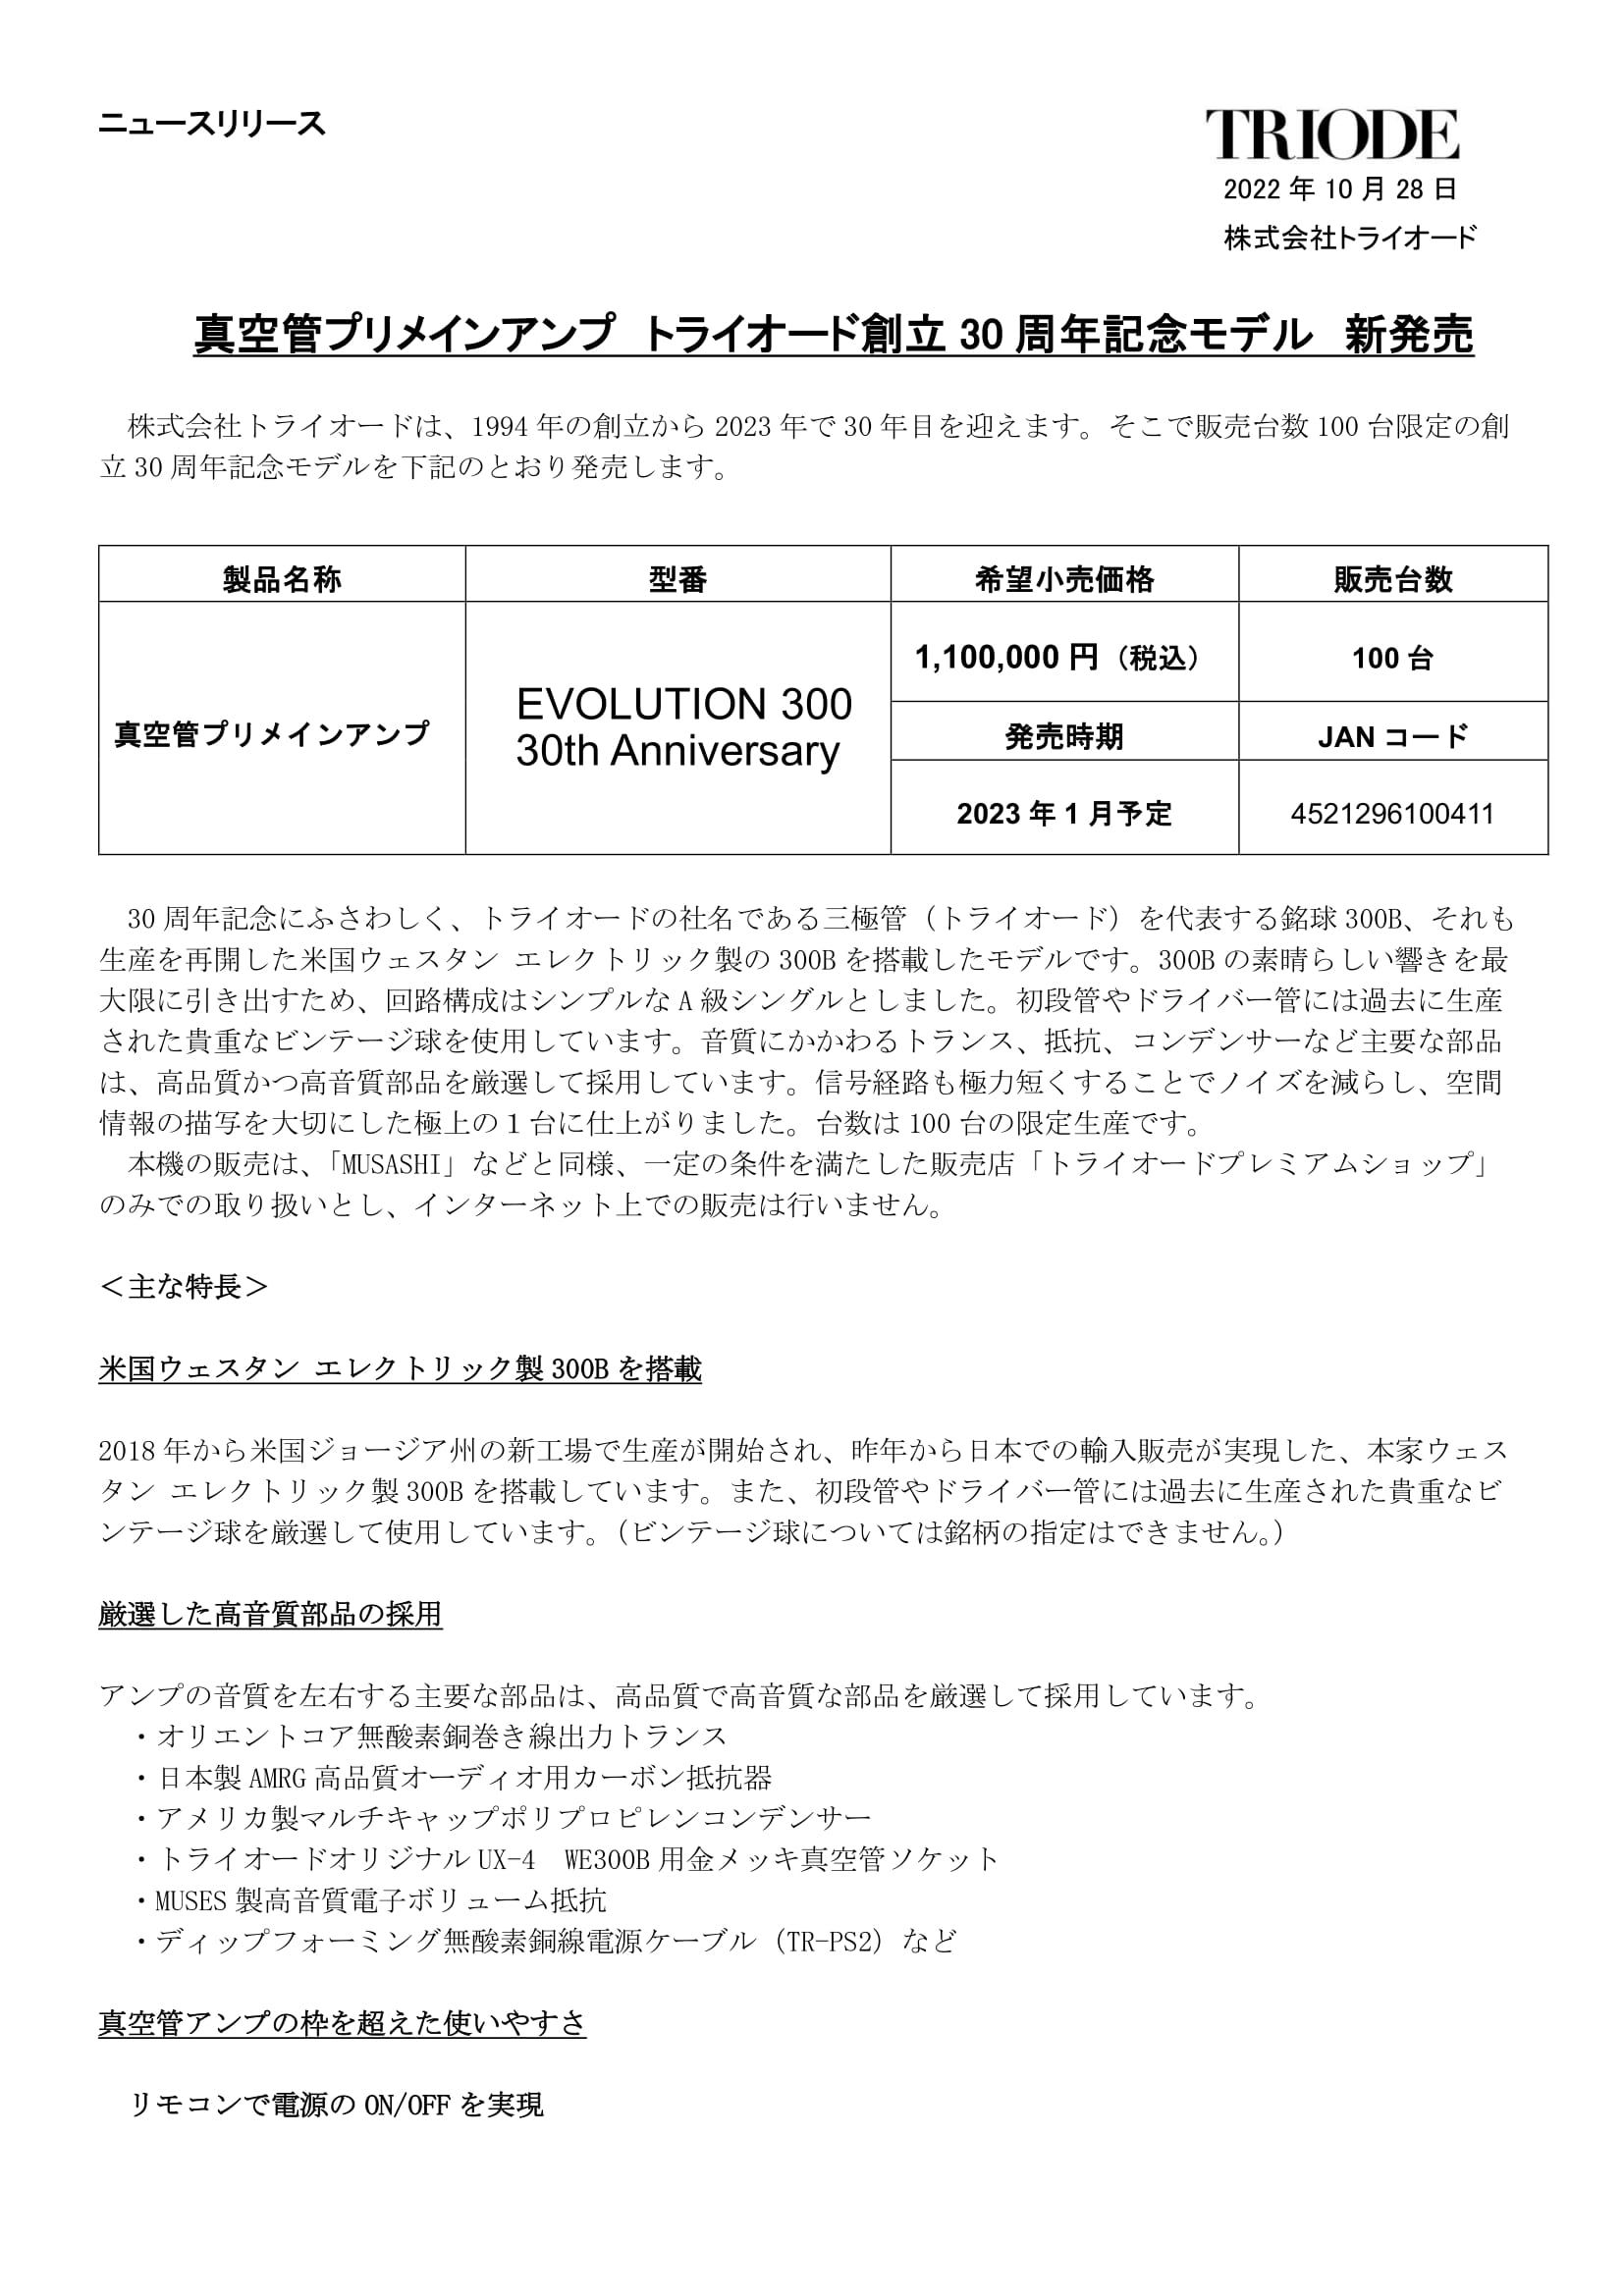 EVOLUTION300 30th Anniversary ニュースリリース 221028-1